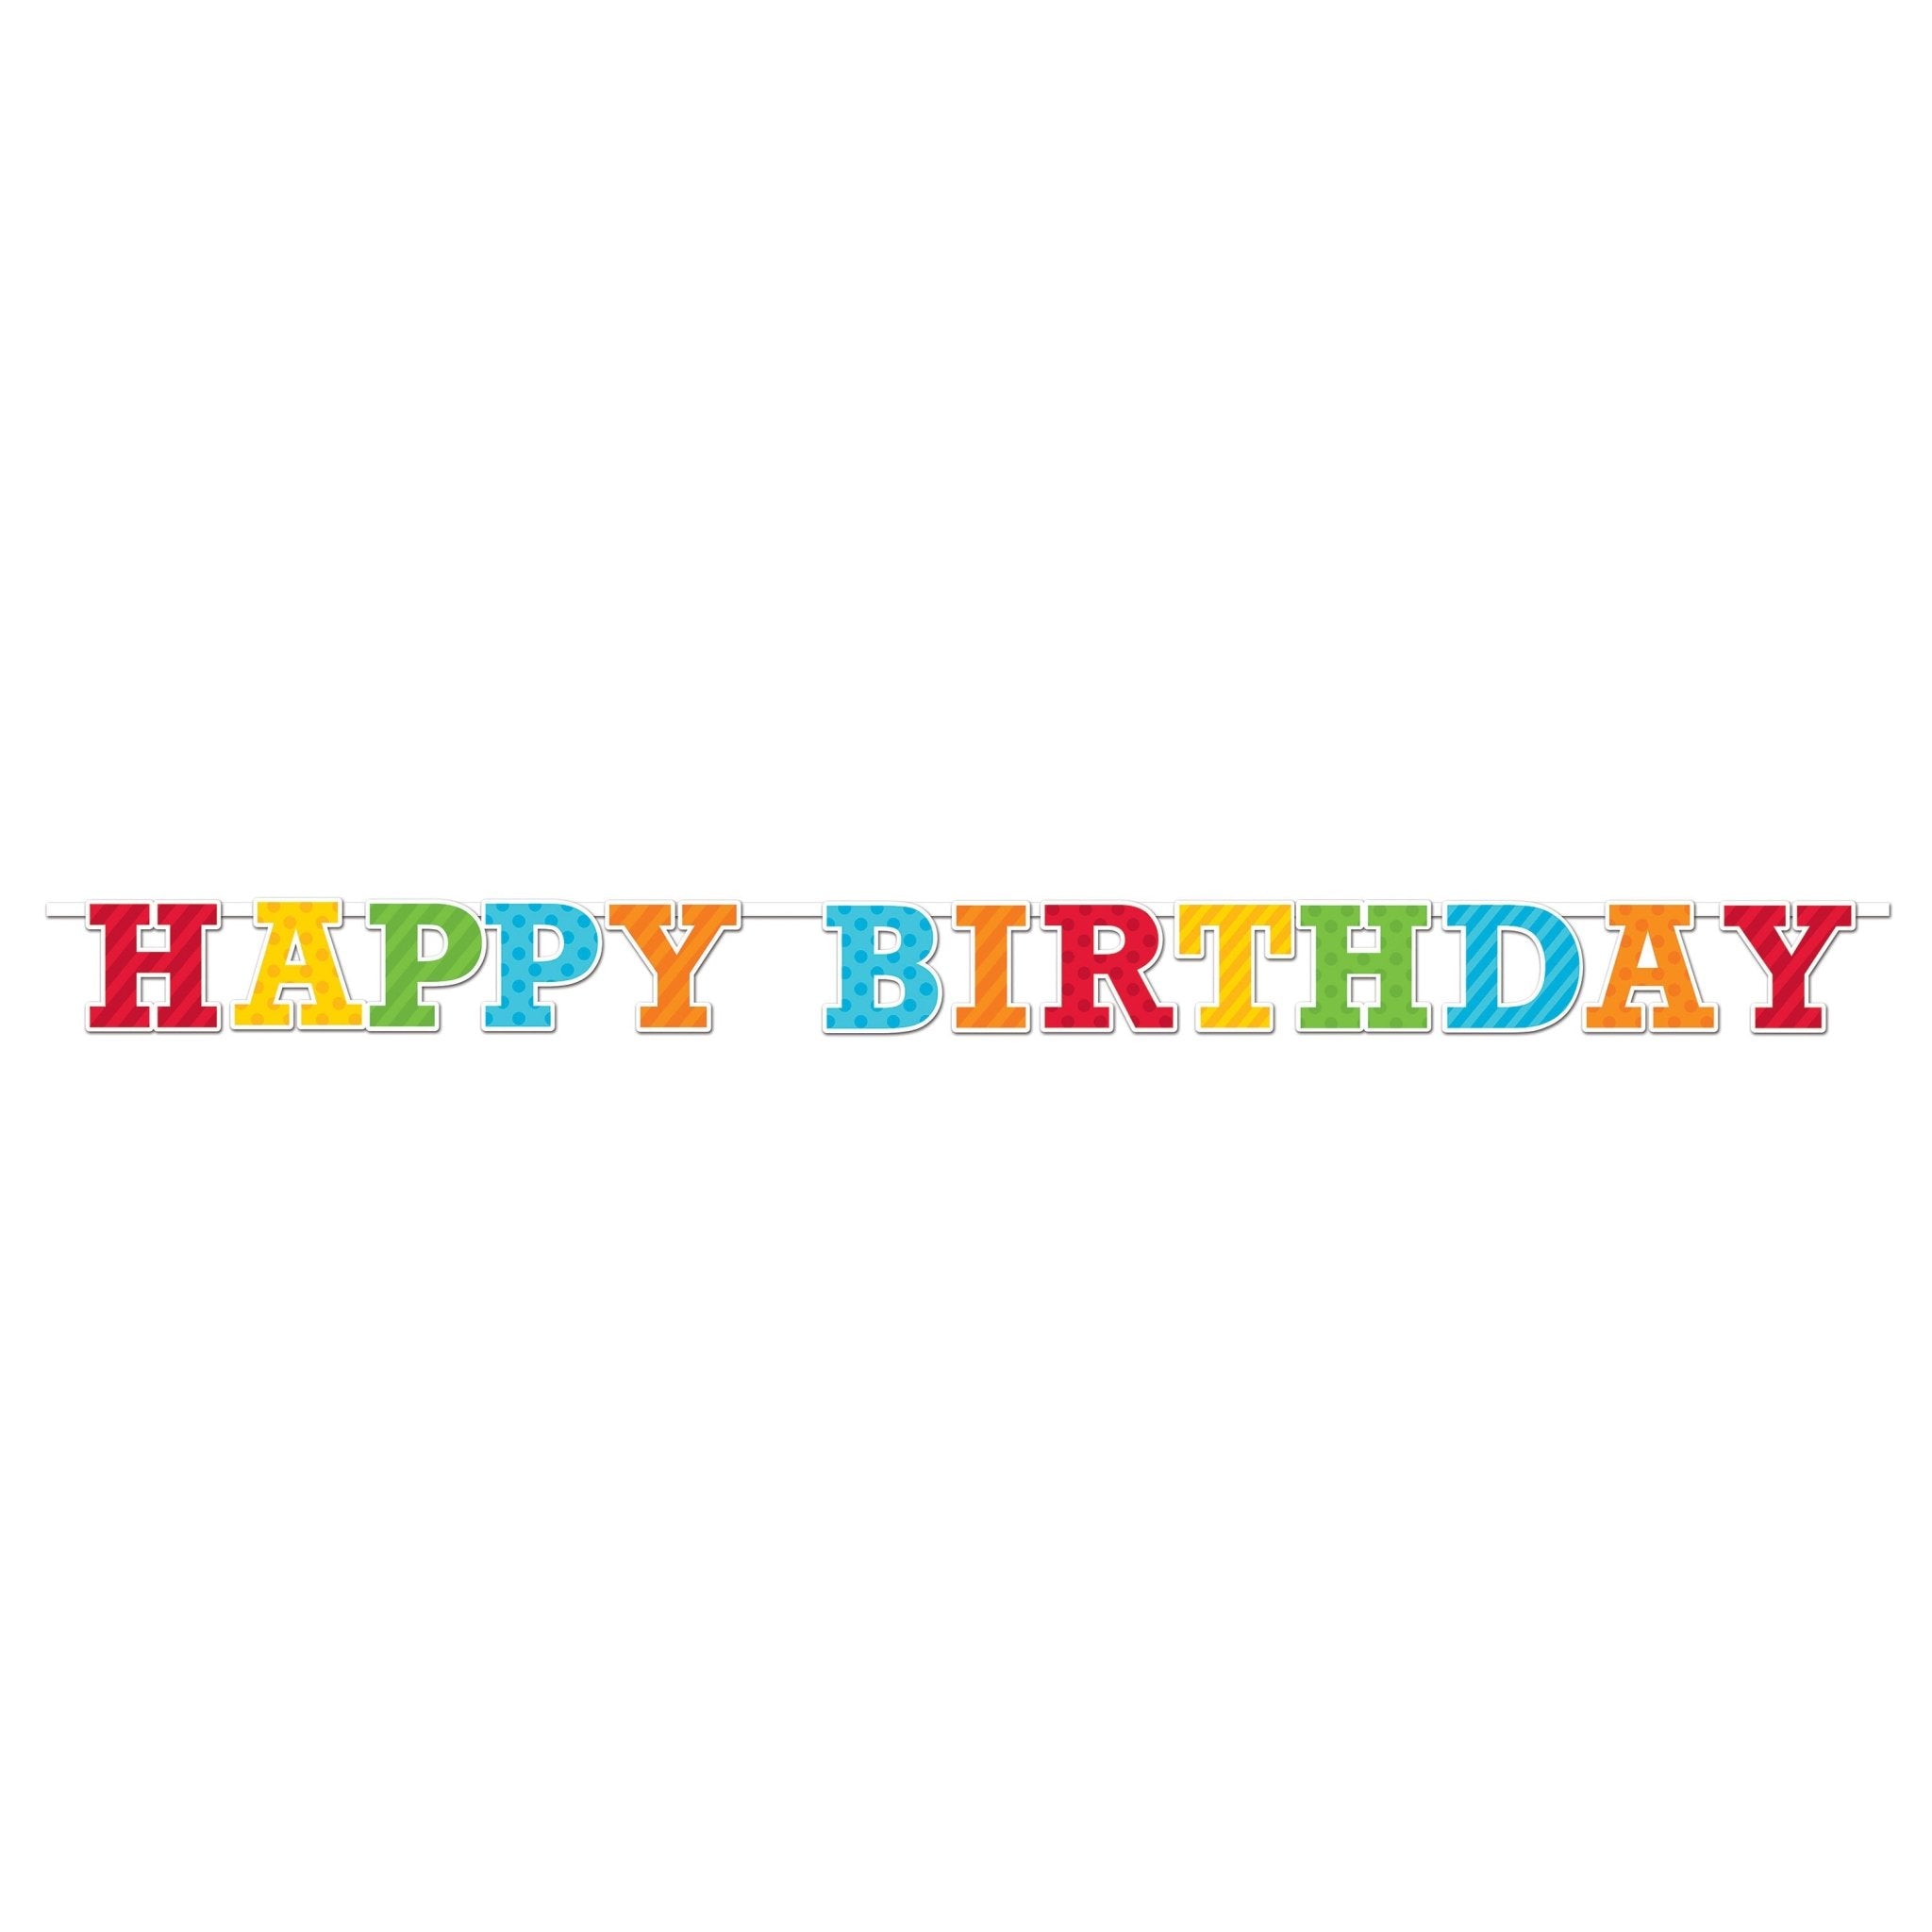 Ice Cream Party Happy Birthday Banner - Stesha Party - 1st birthday girl,  banner garland, birthday girl